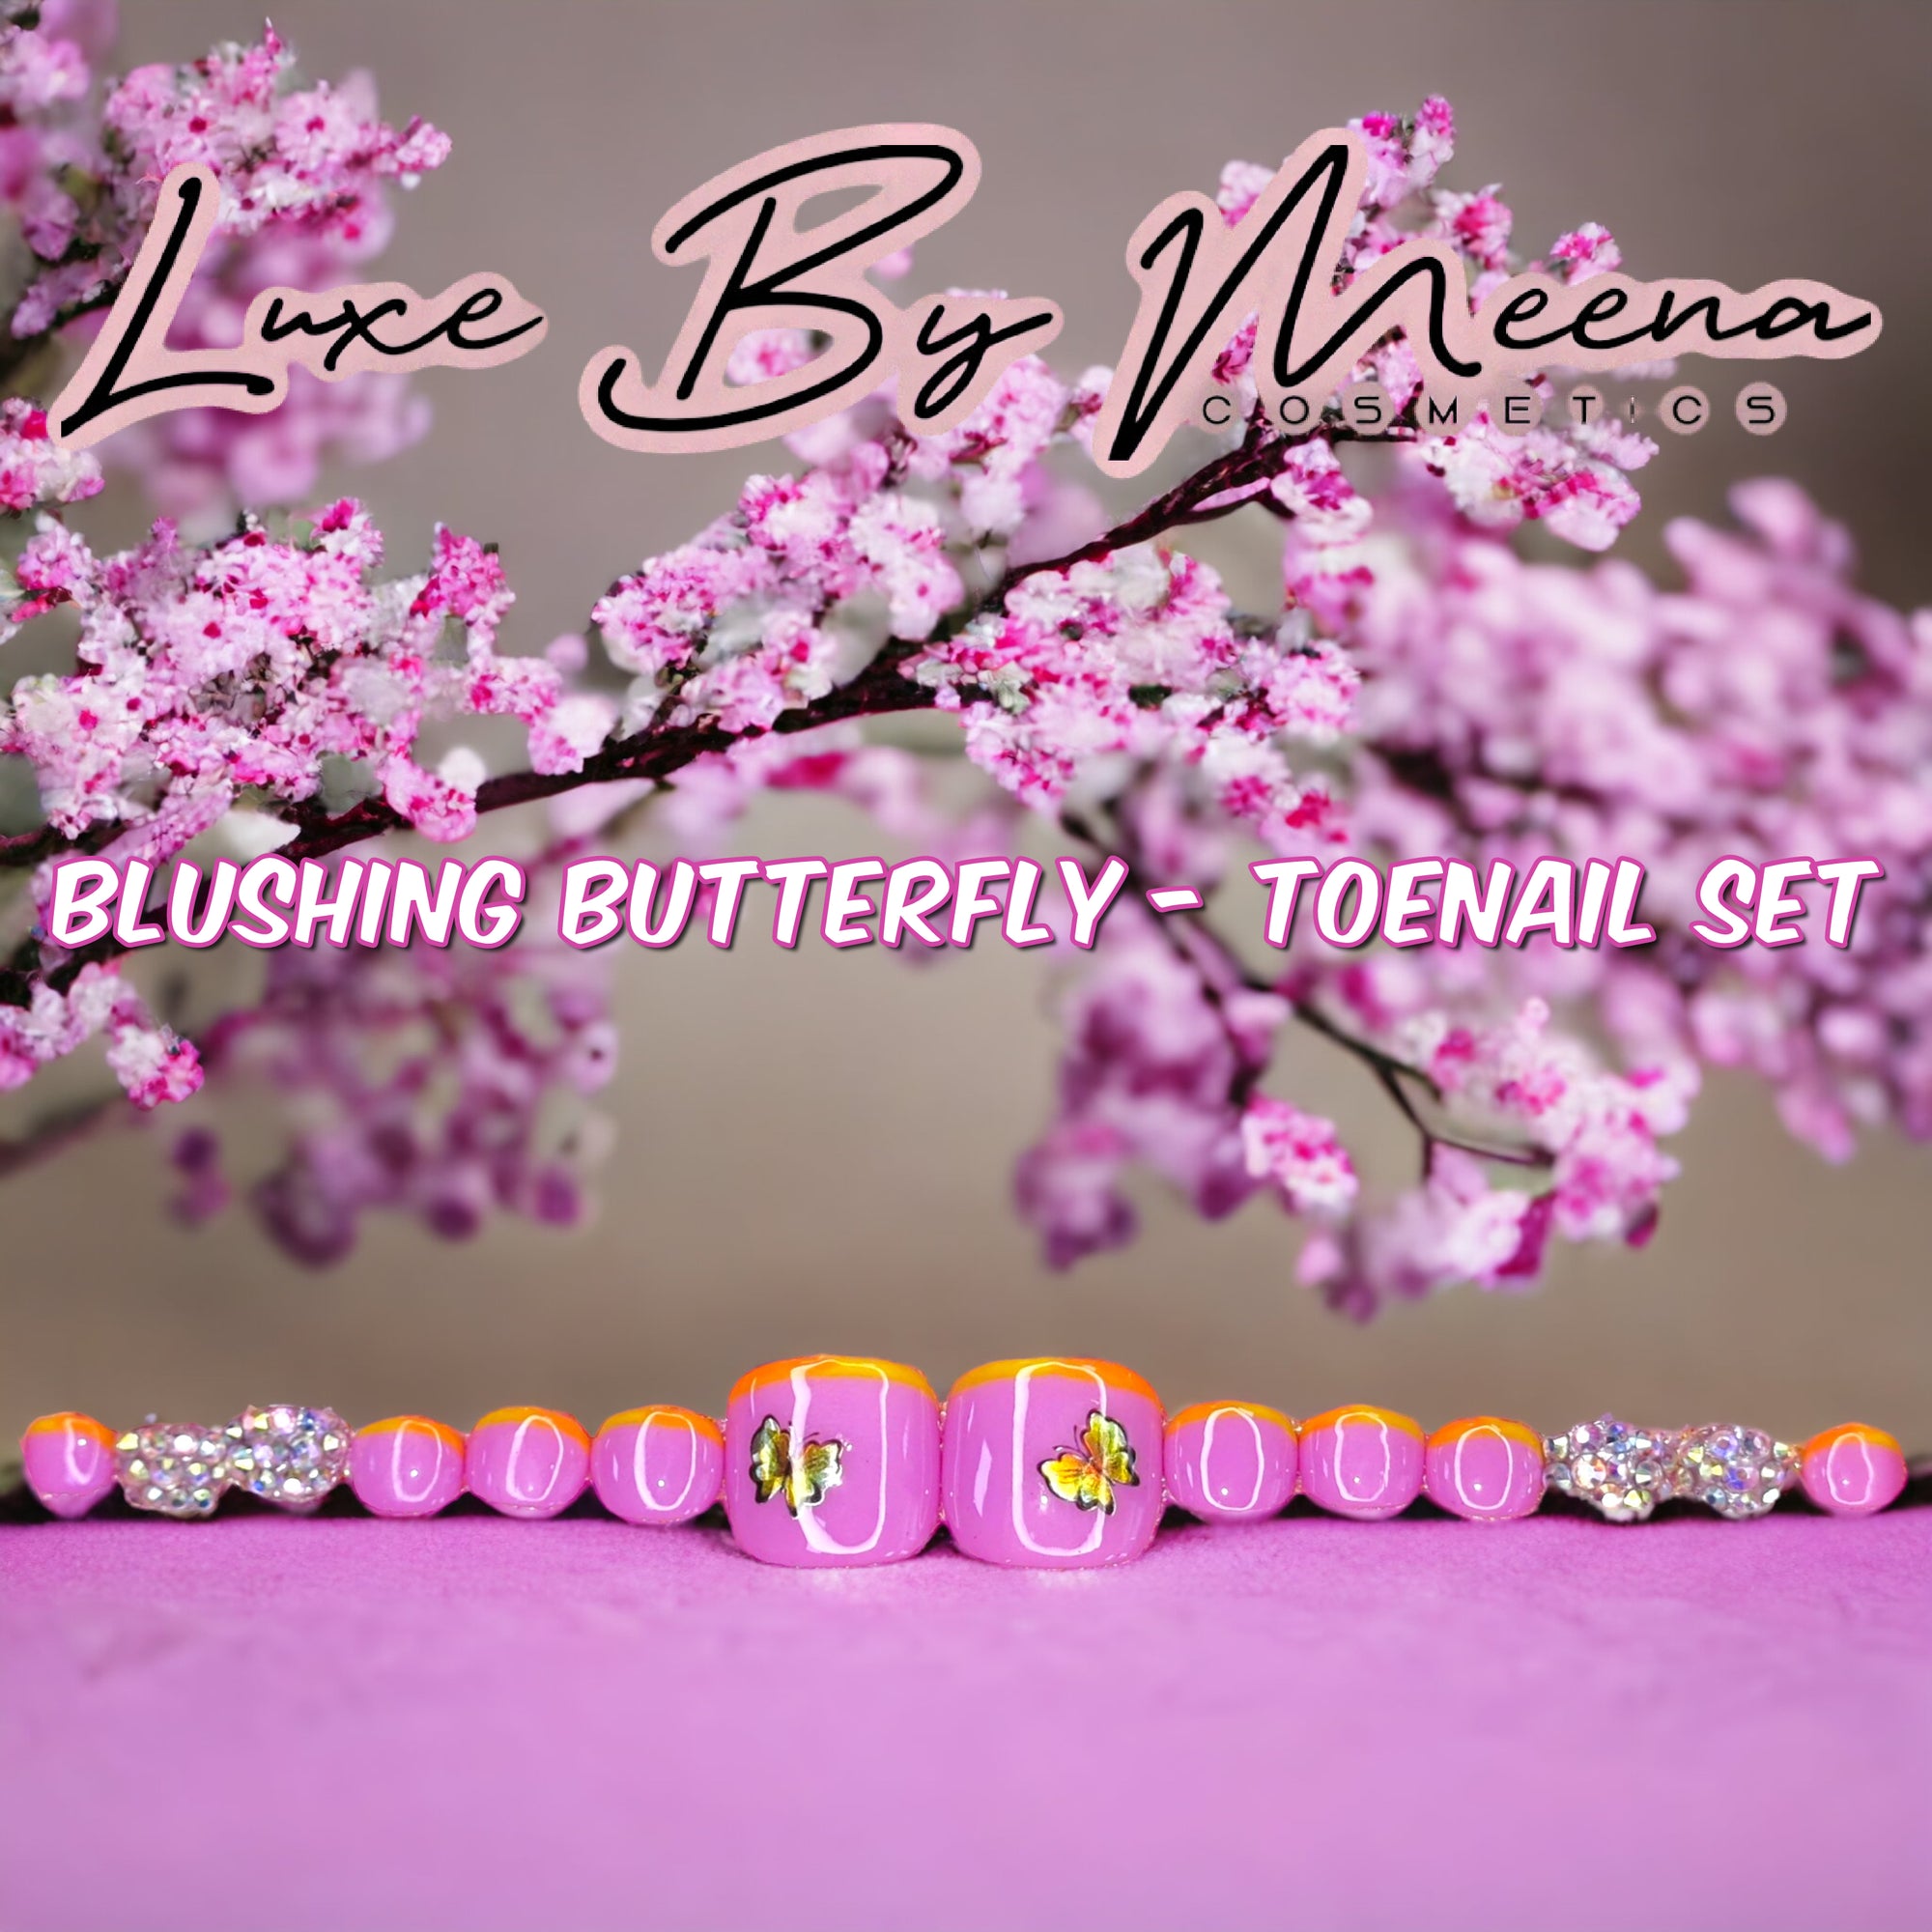 Blushing Butterfly Toenails - Handmade Press-On Nail Set